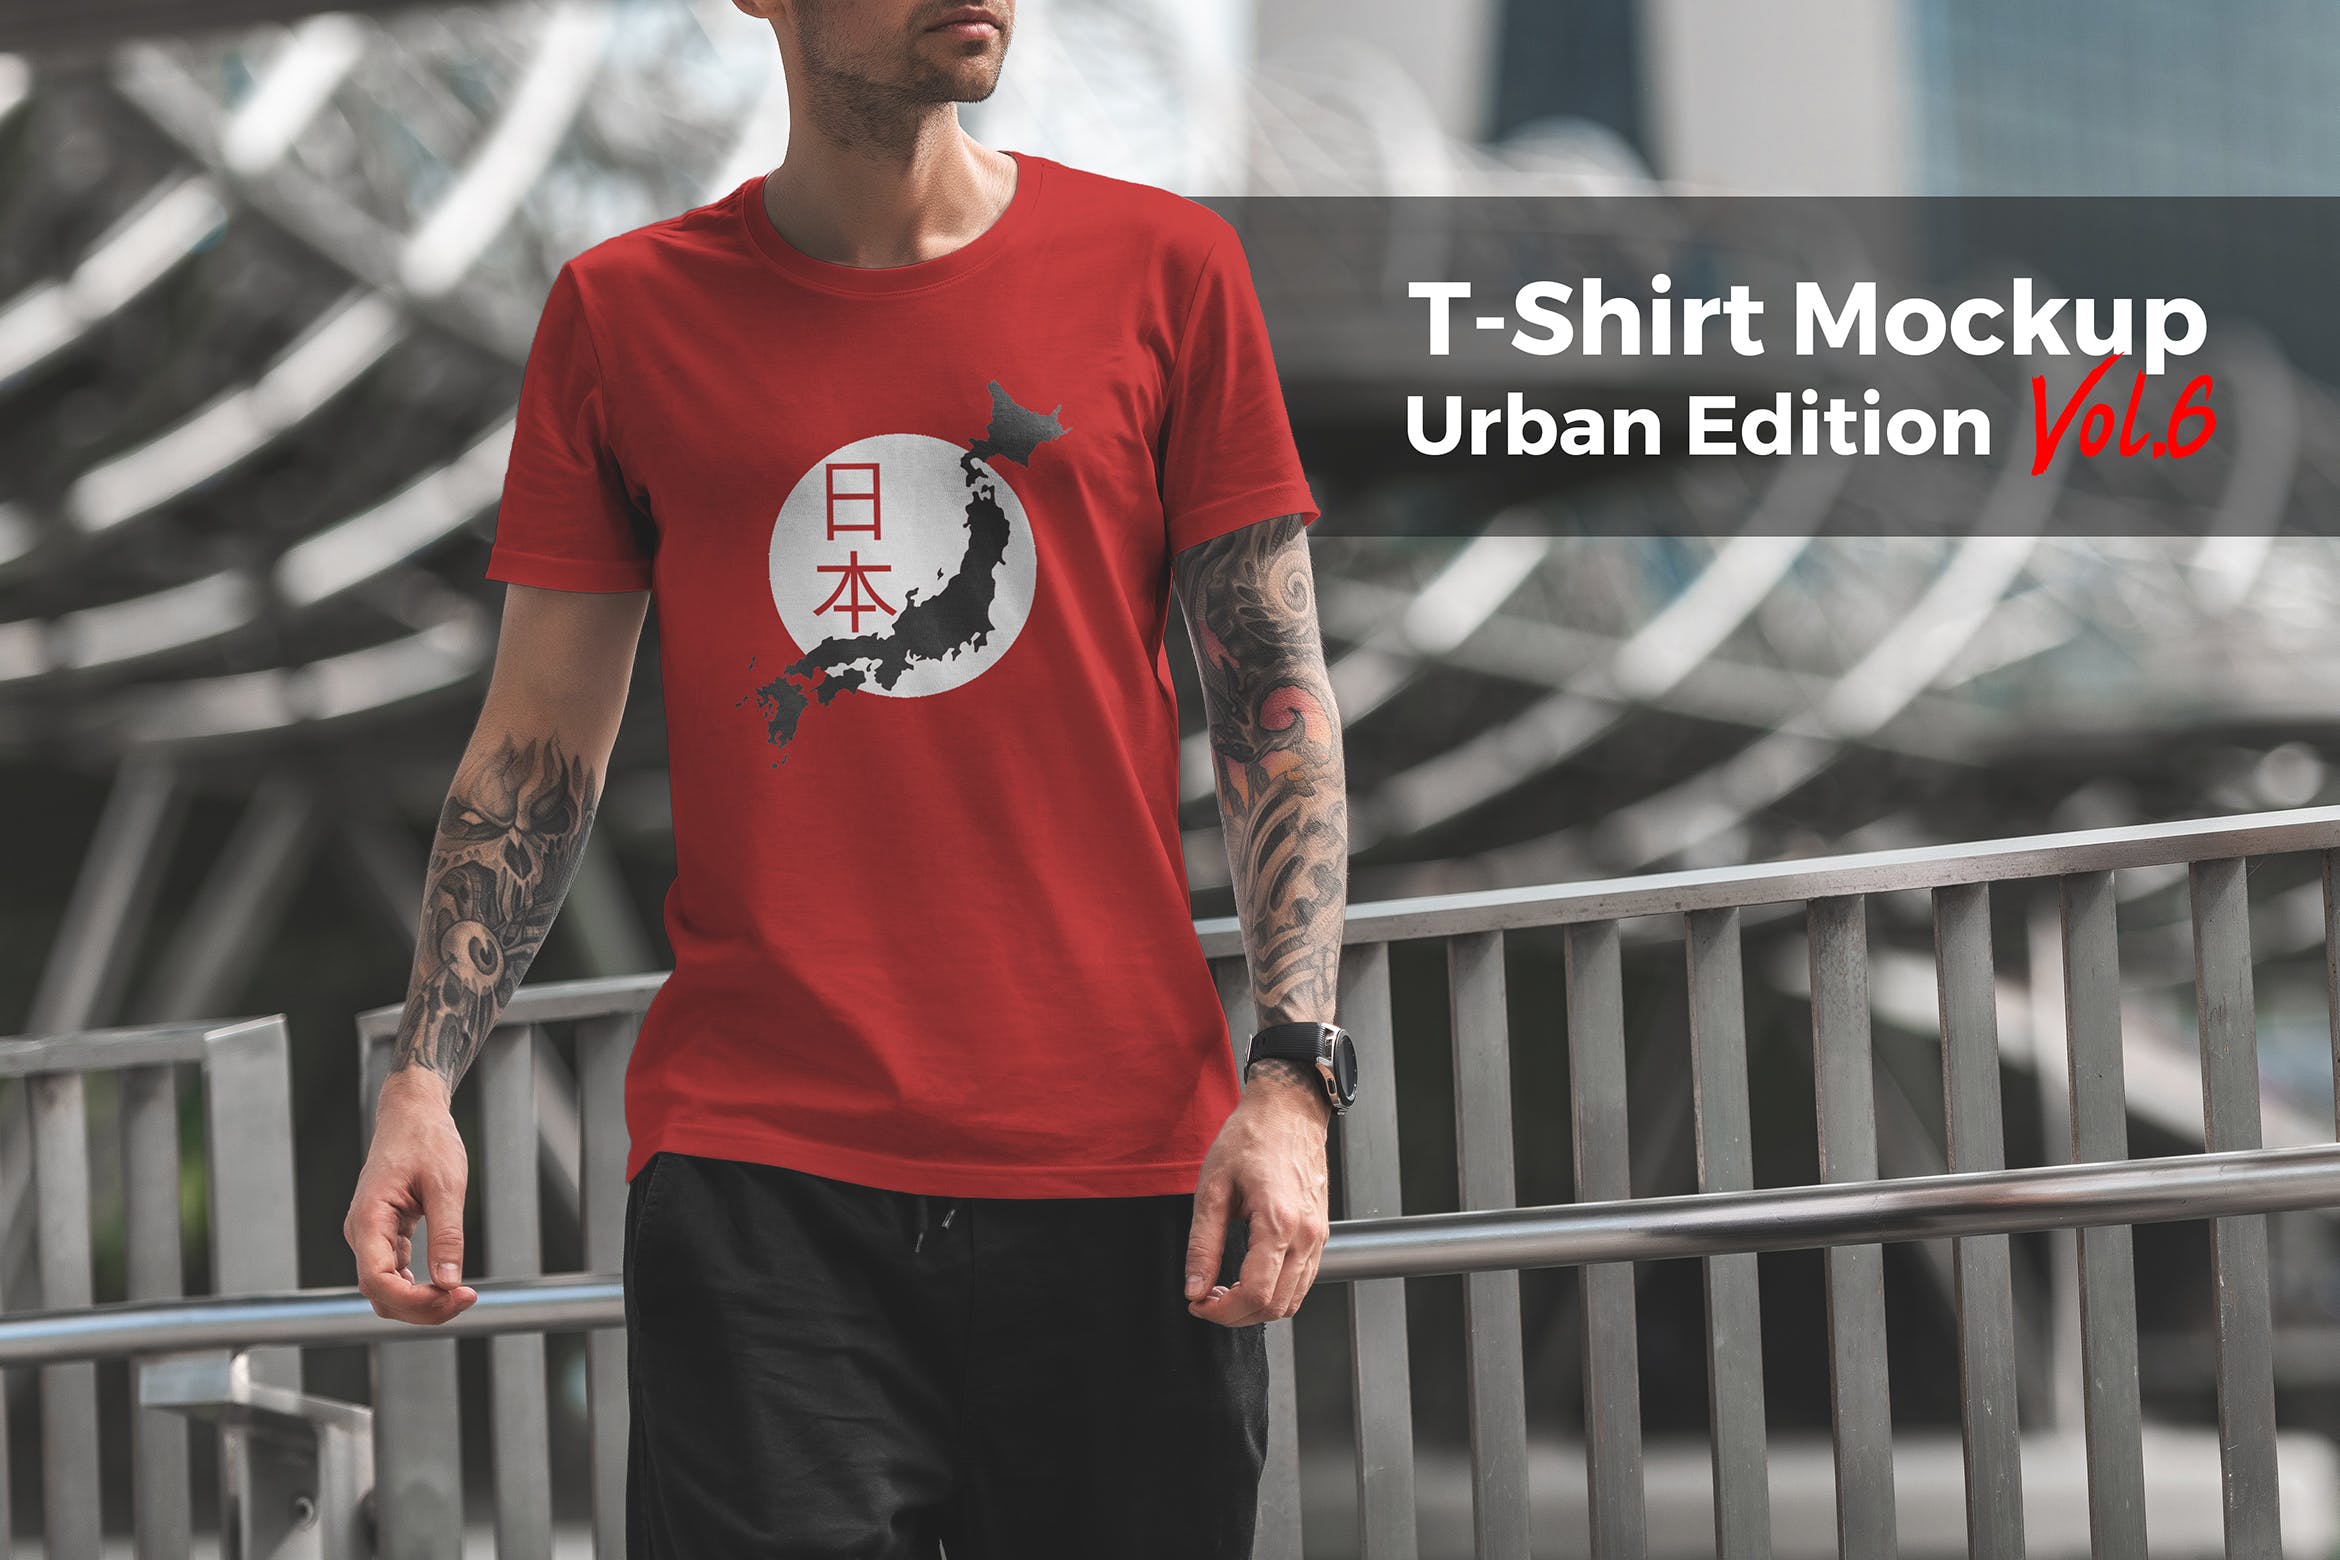 城市系列-印花T恤产品展示样机素材库精选模板v6 T-Shirt Mockup Urban Edition Vol. 6插图